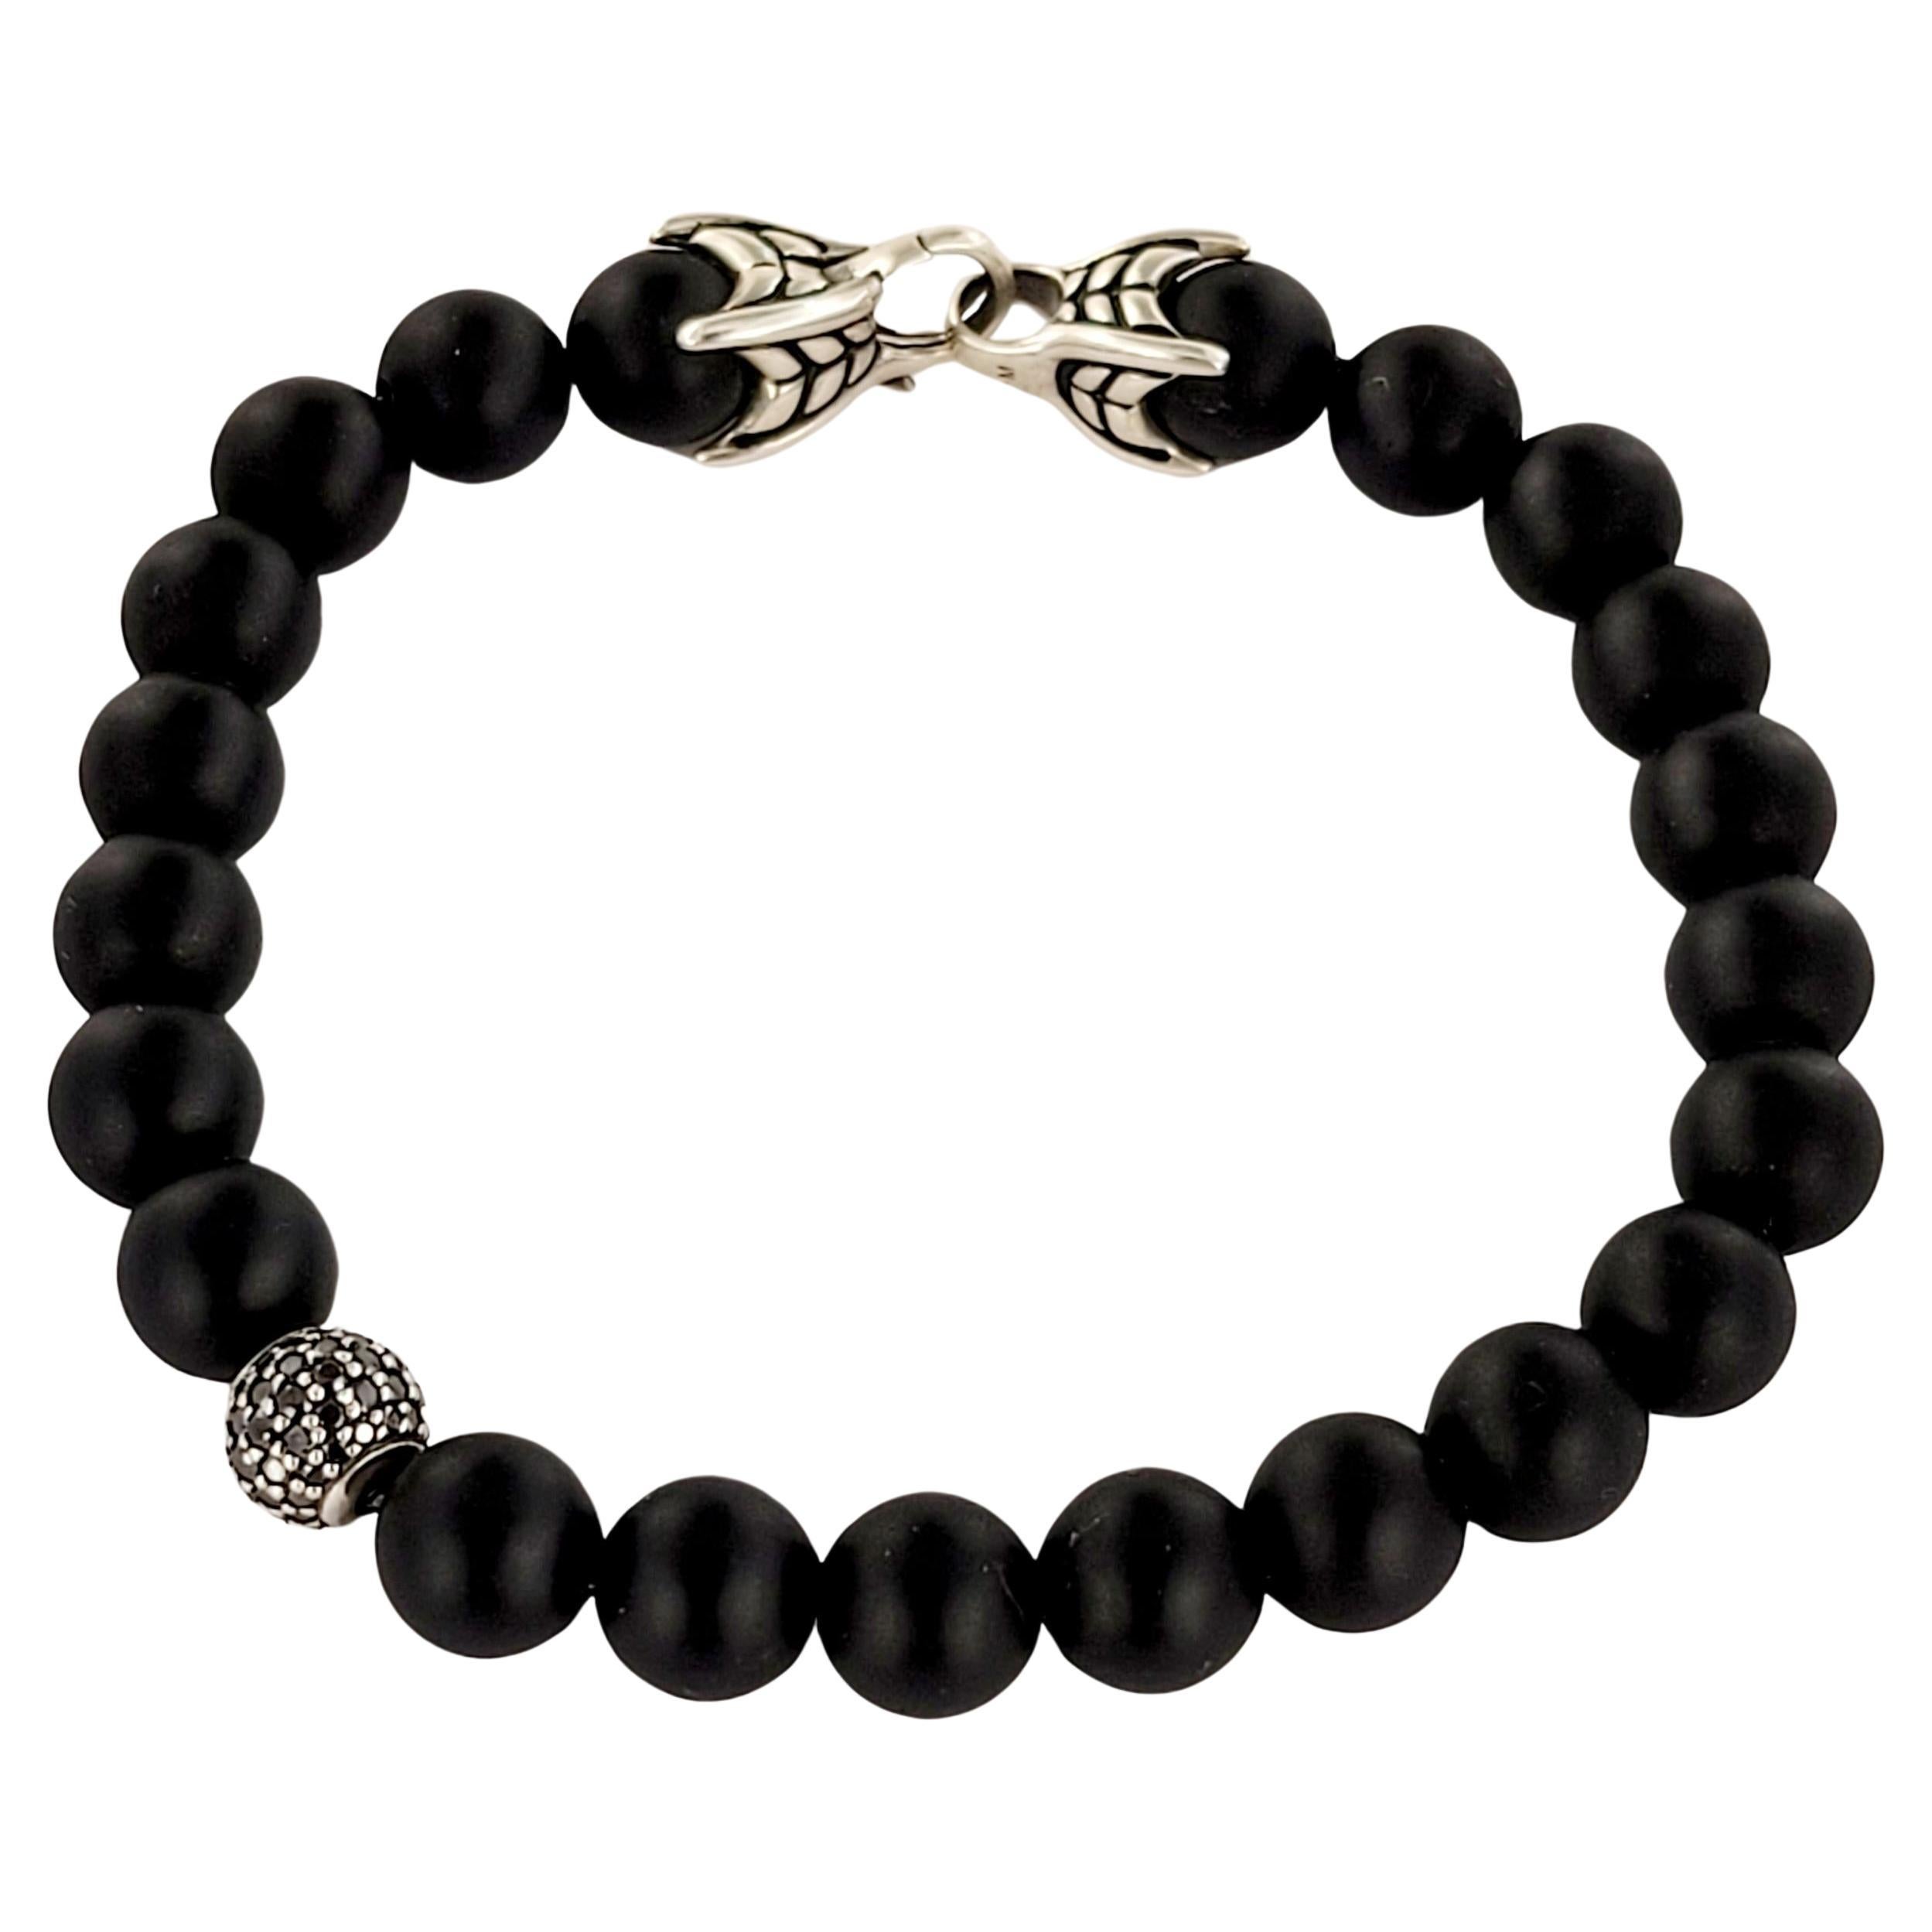 Spiritual Beads Bracelet Sterling Silver with Black Onyx and Pave Black Diamond